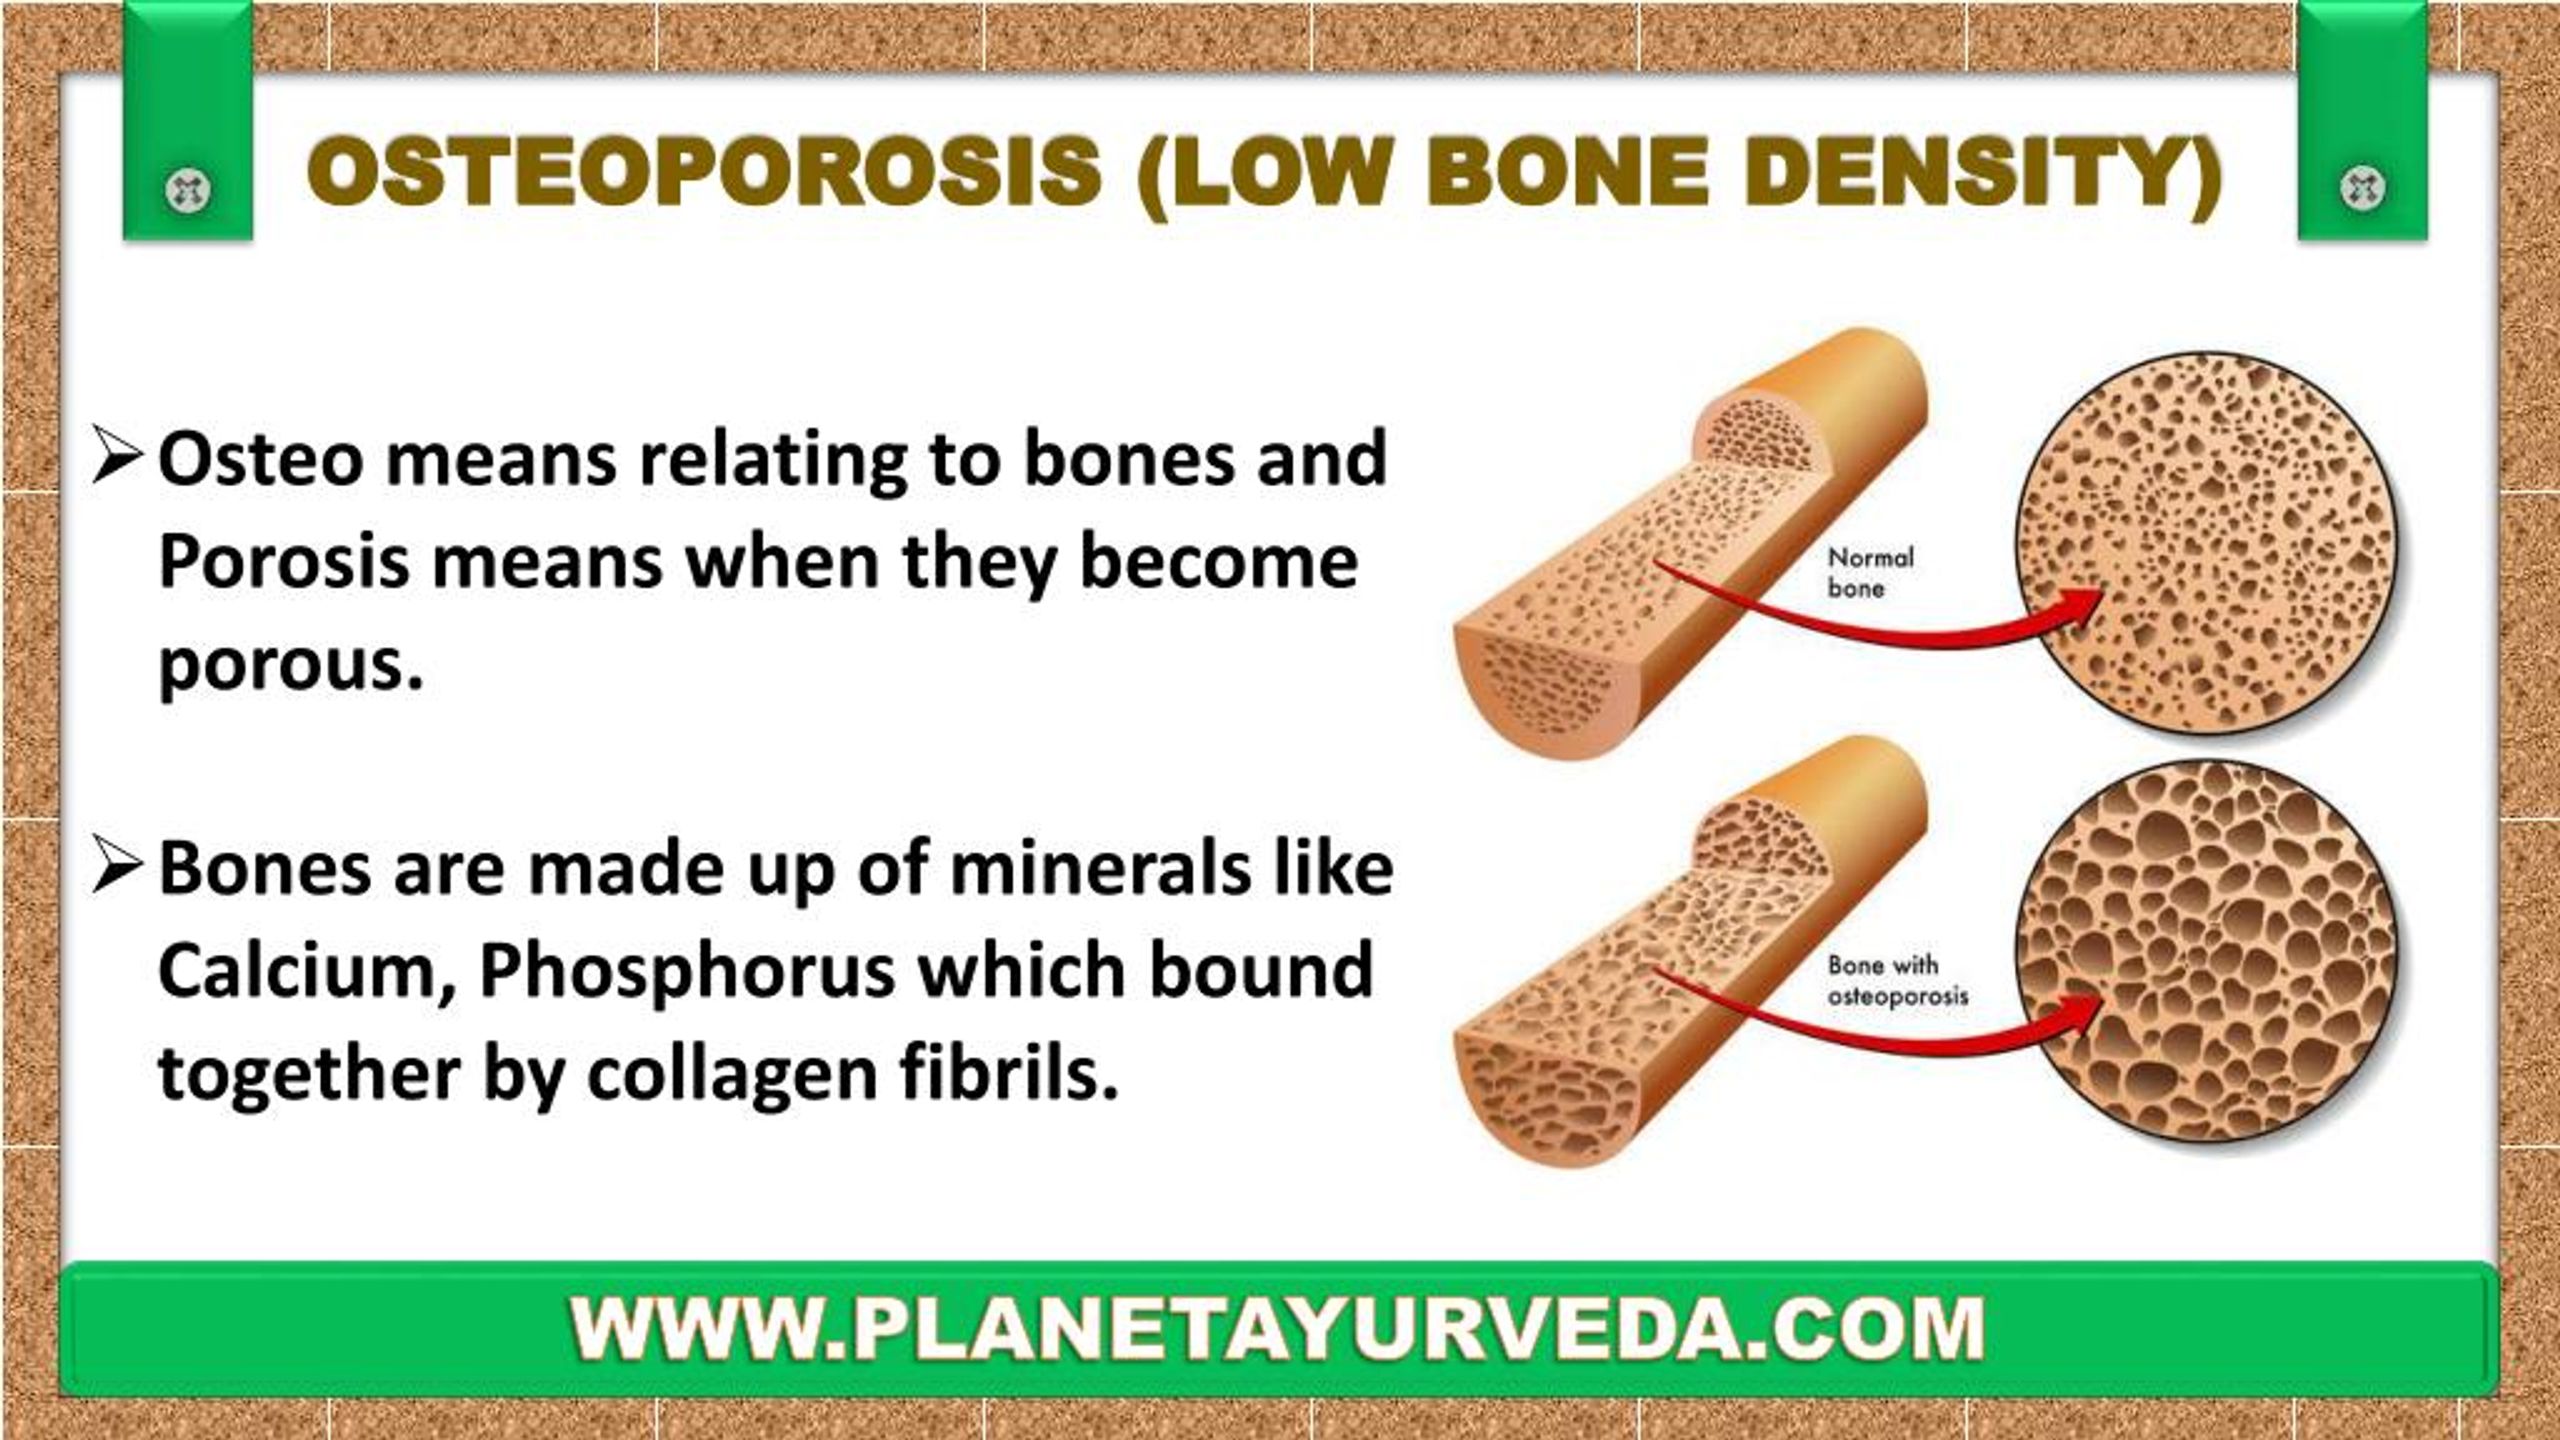 PPT Treatment Of Osteoporosis Low Bone Density In Ayurveda Increase Your Bone Density